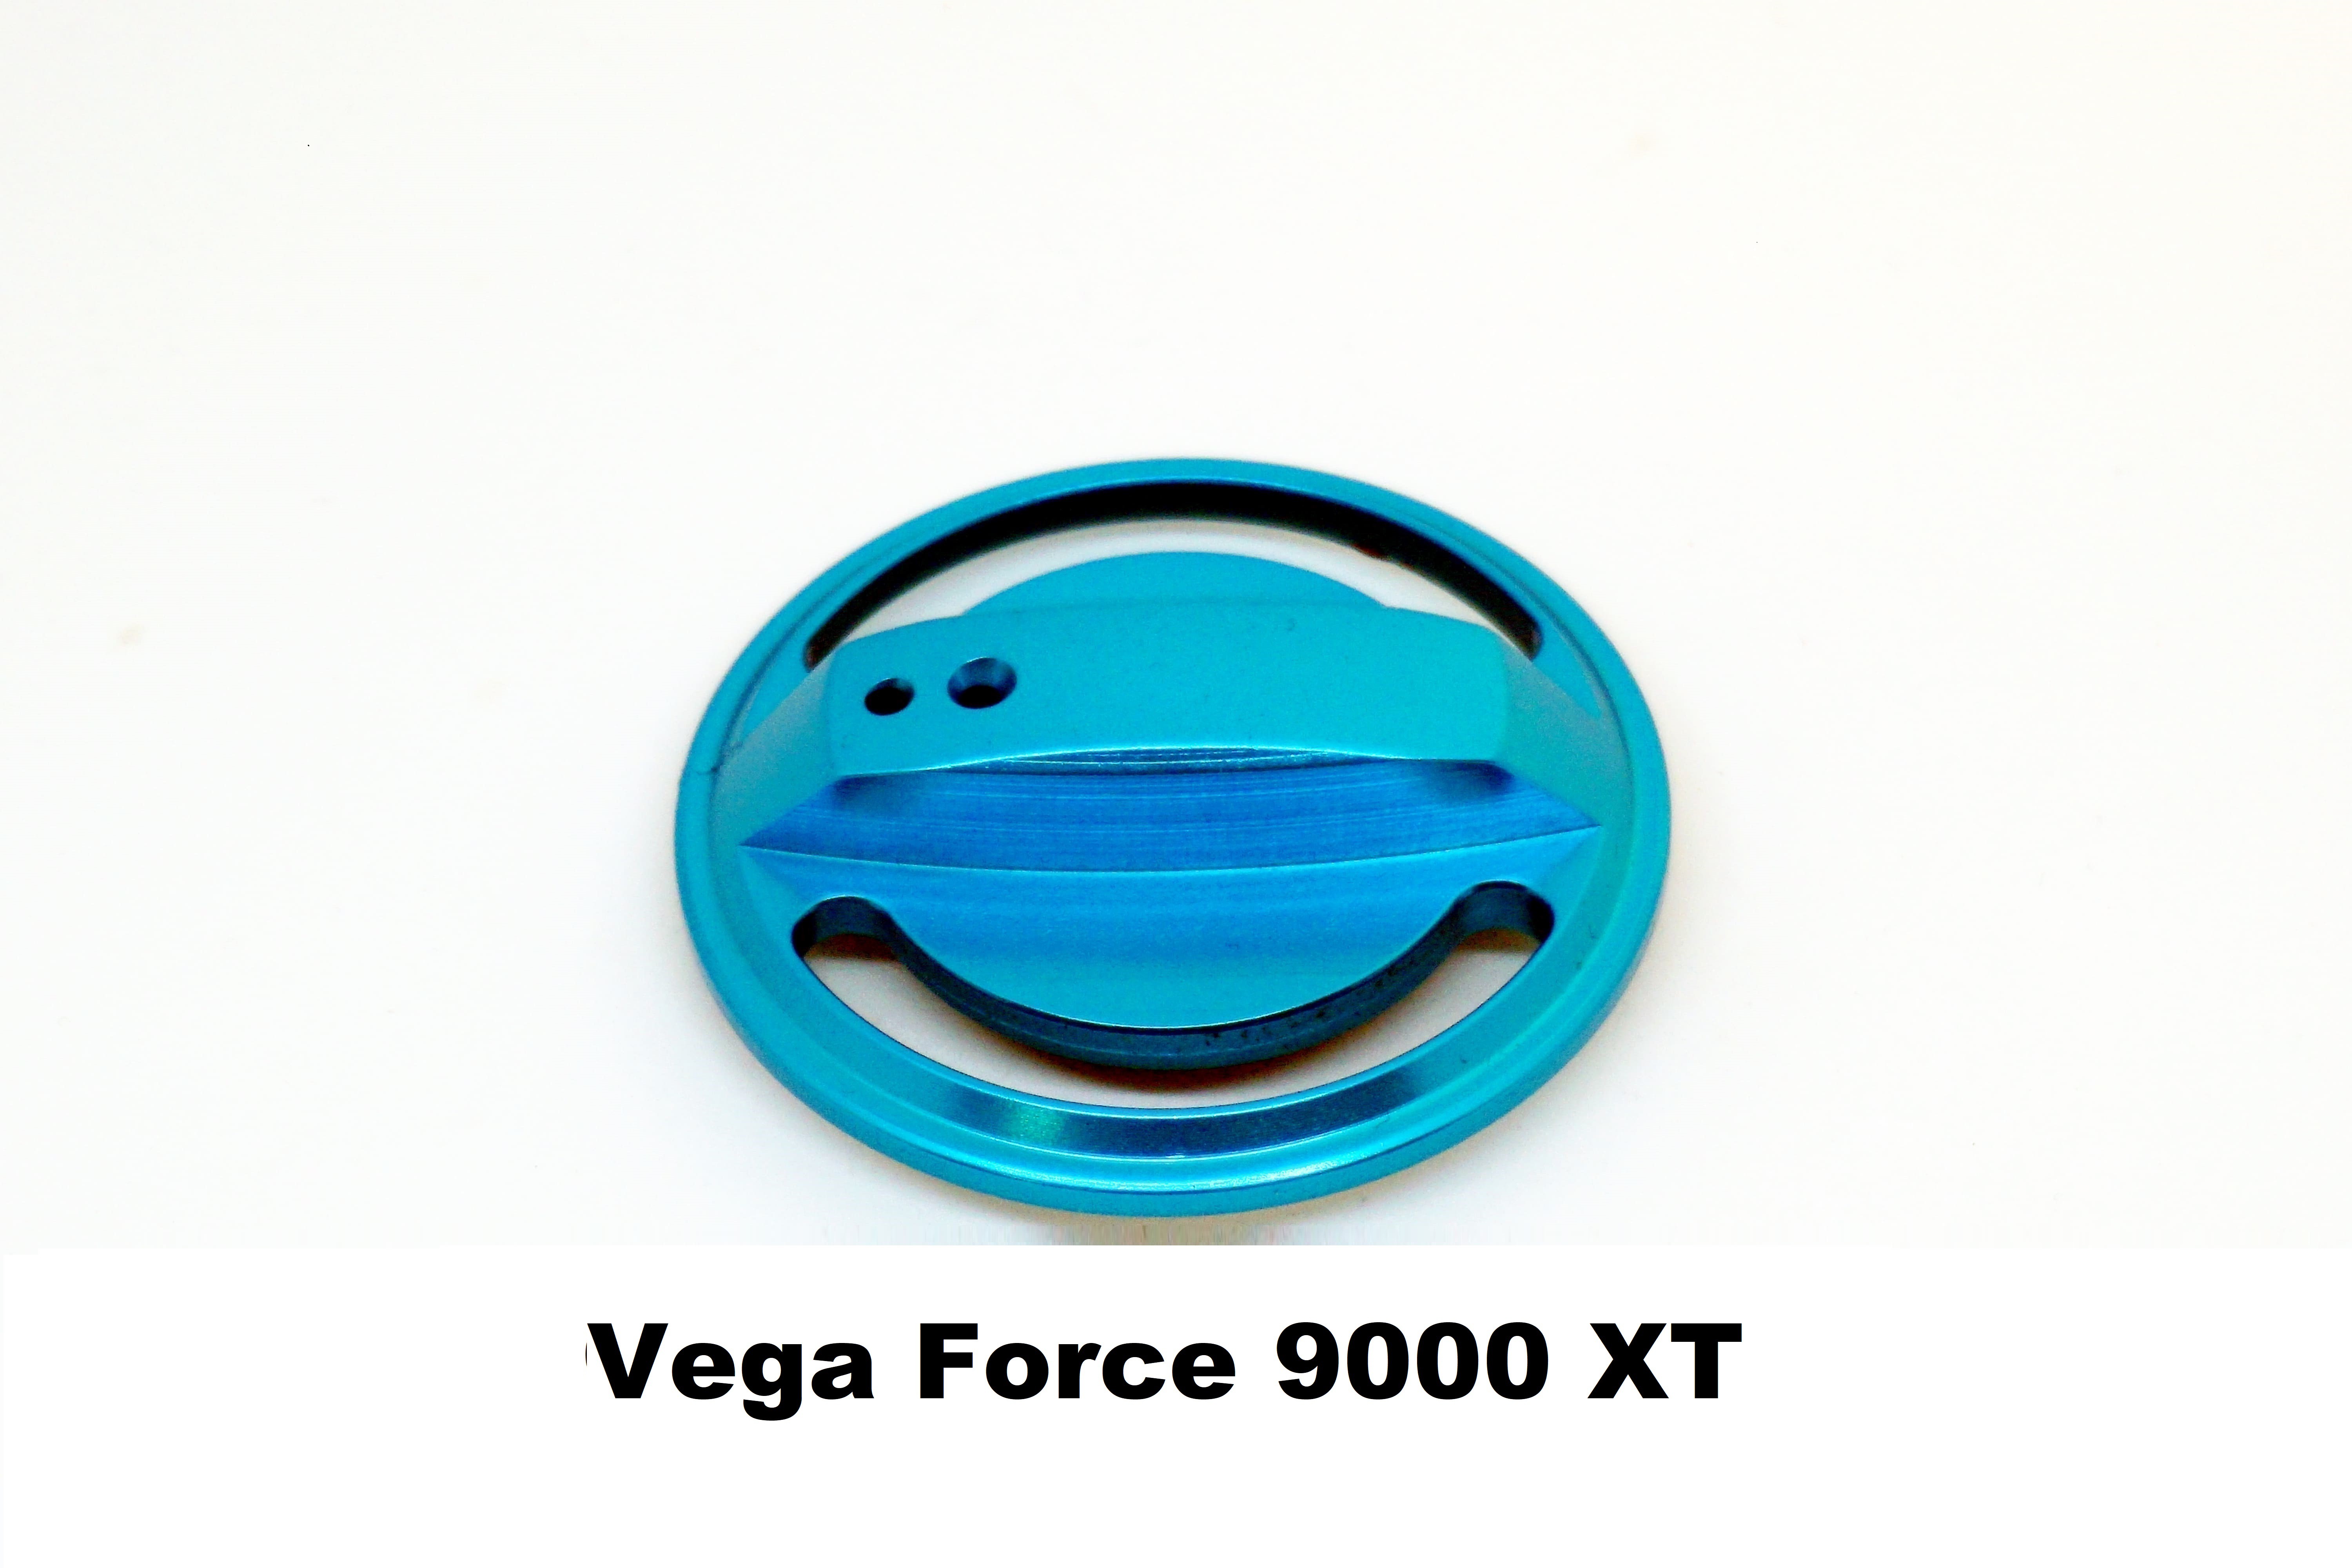 Drag Knob for Vega Force 9000 XT